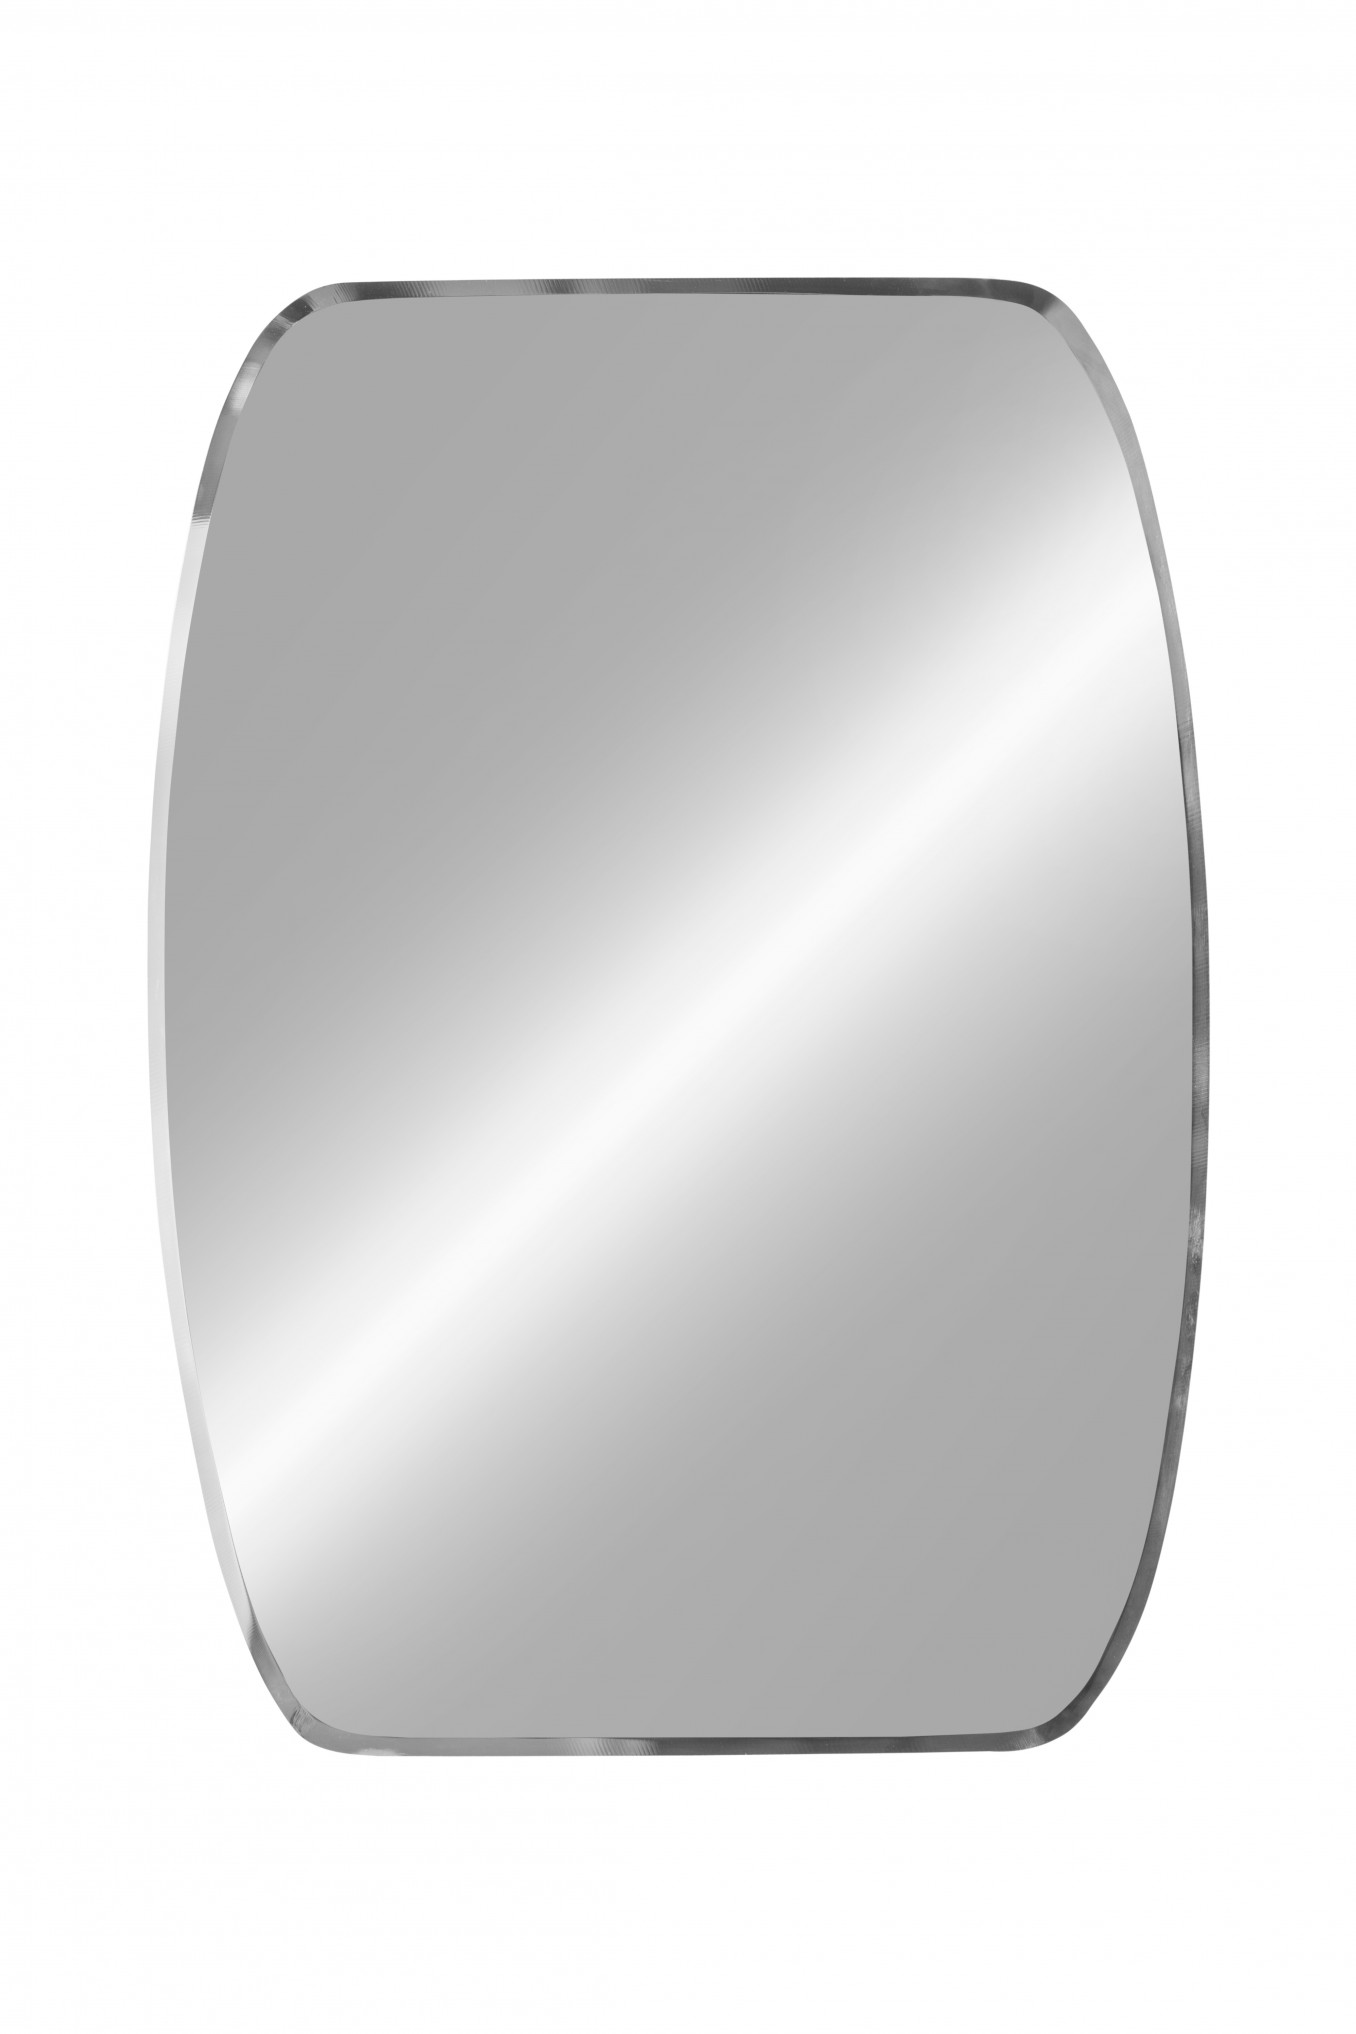 Ogledalo 1006 (60x45)